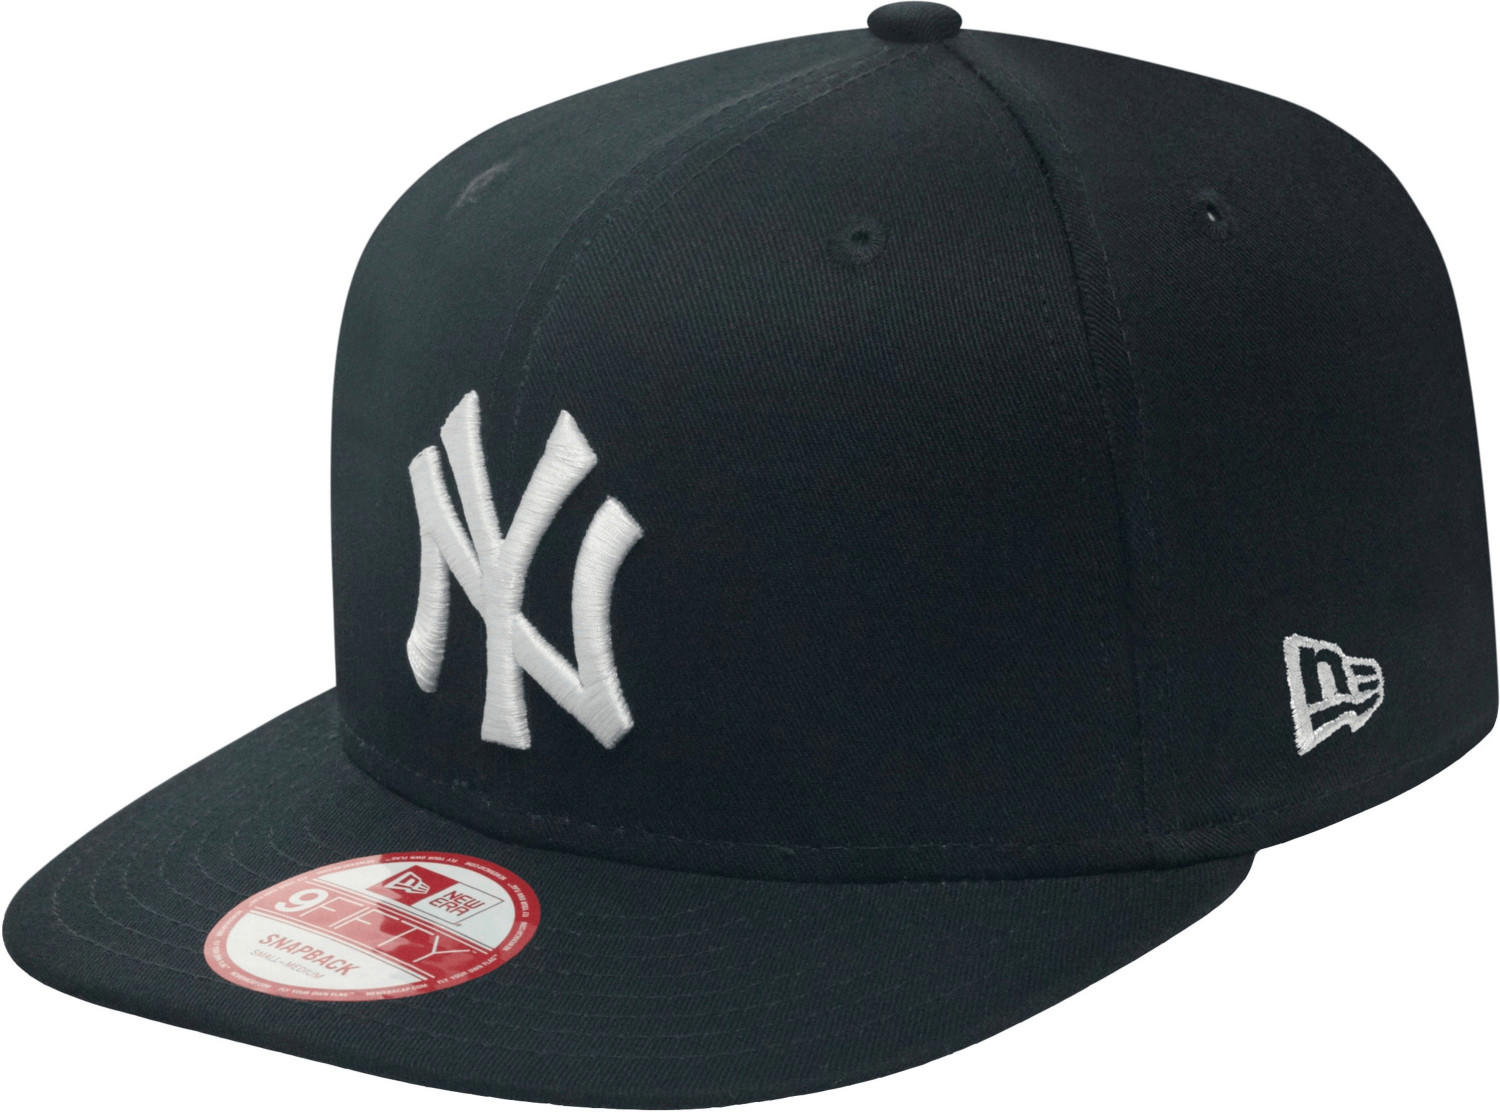 New Era New York Yankees MLB 9FIFTY black